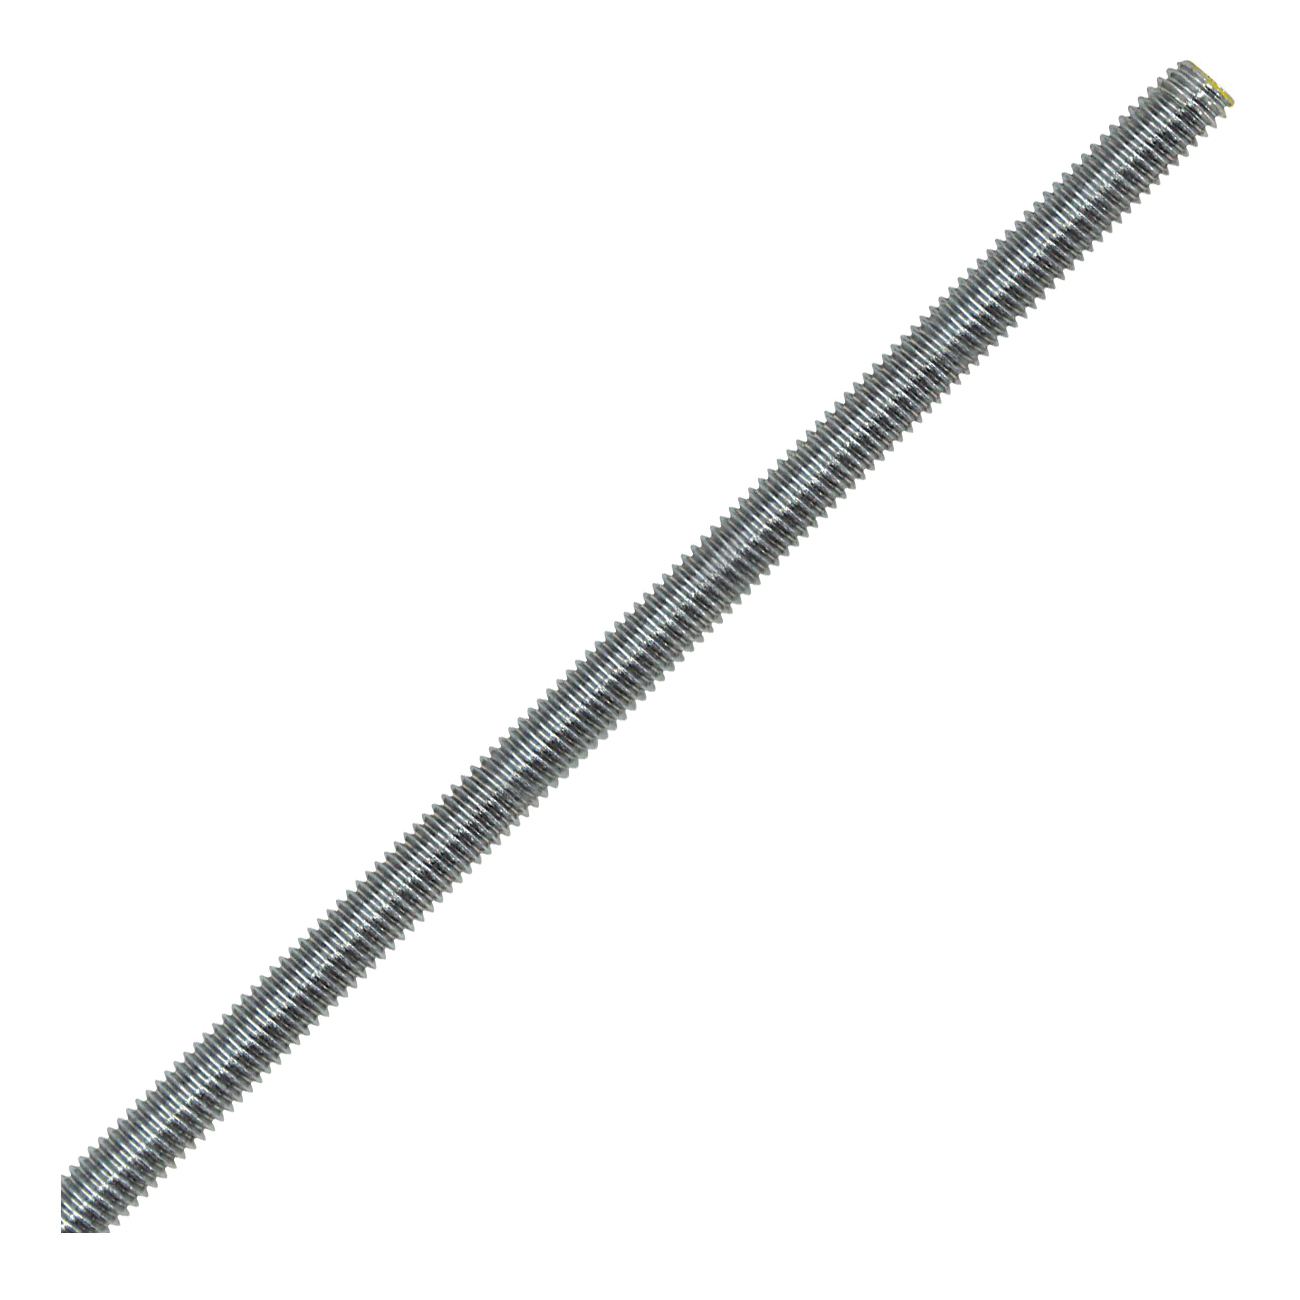 Paulin® Papco® 141-492 Uni-Rod® 141 Fully Threaded Rod, 3/4-10, 120 in OAL, Carbon Steel, Zinc Plated